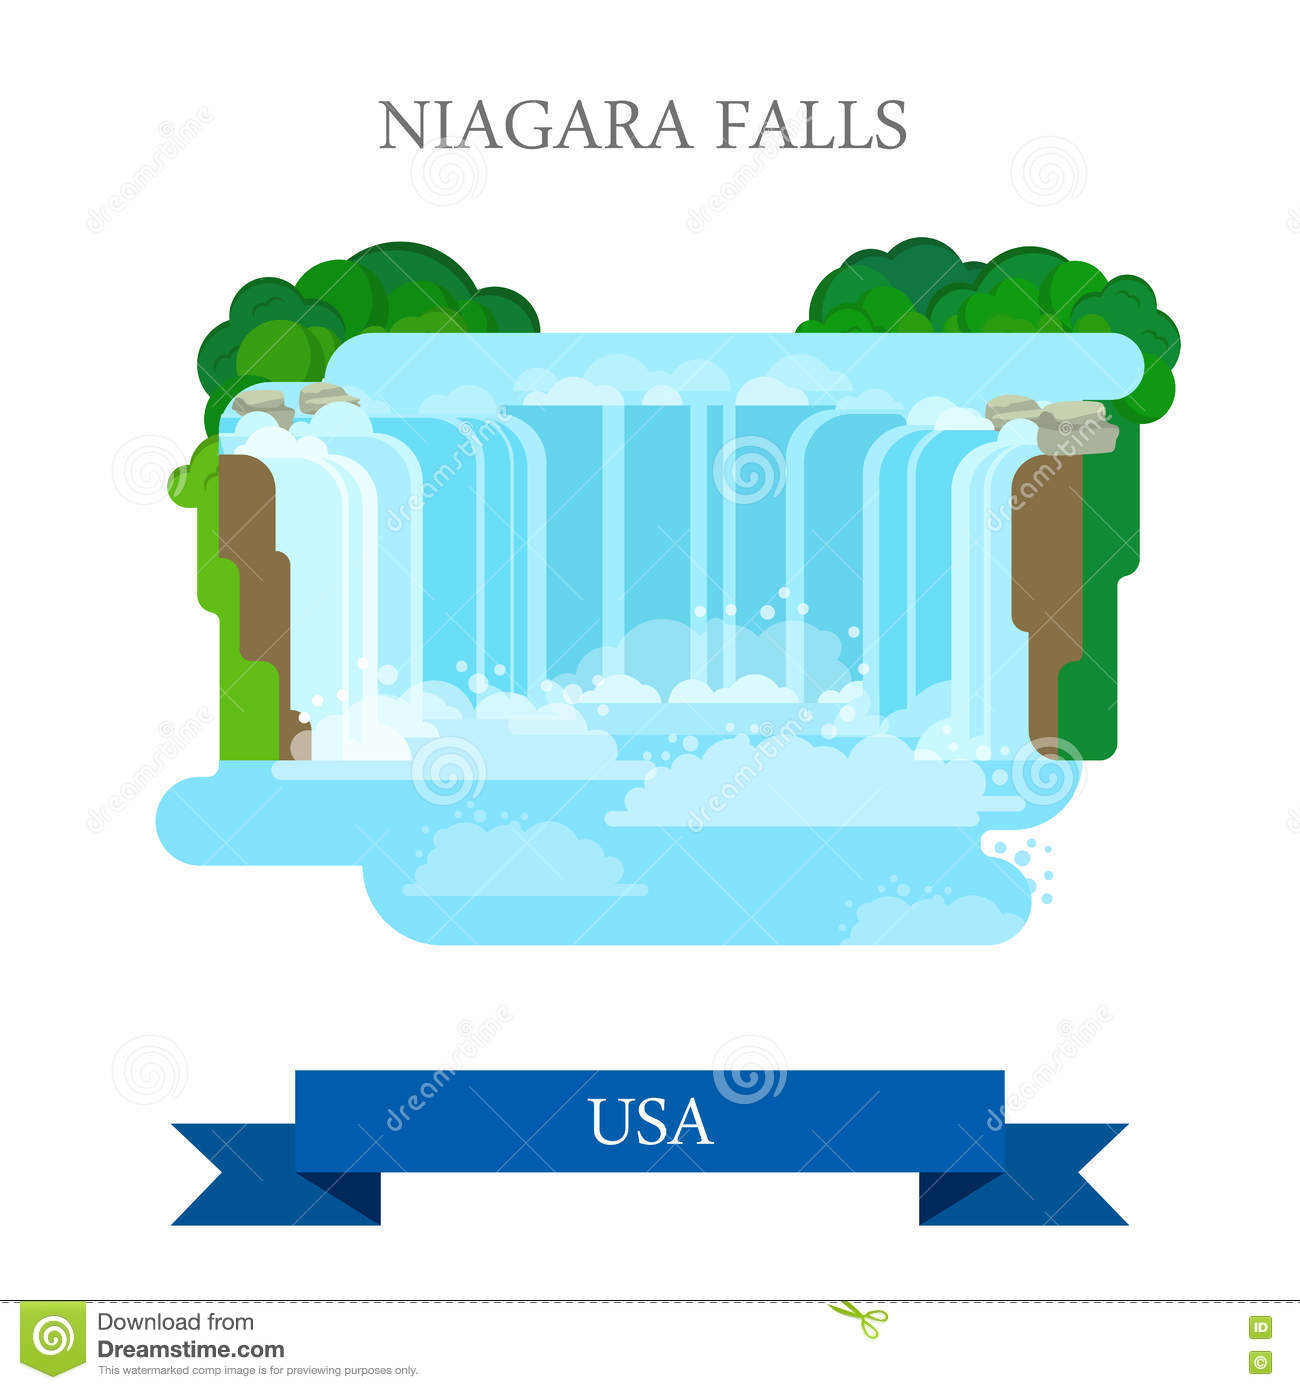 Niagara Falls in United States / Canada. Flat cart Royalty Free Stock Images